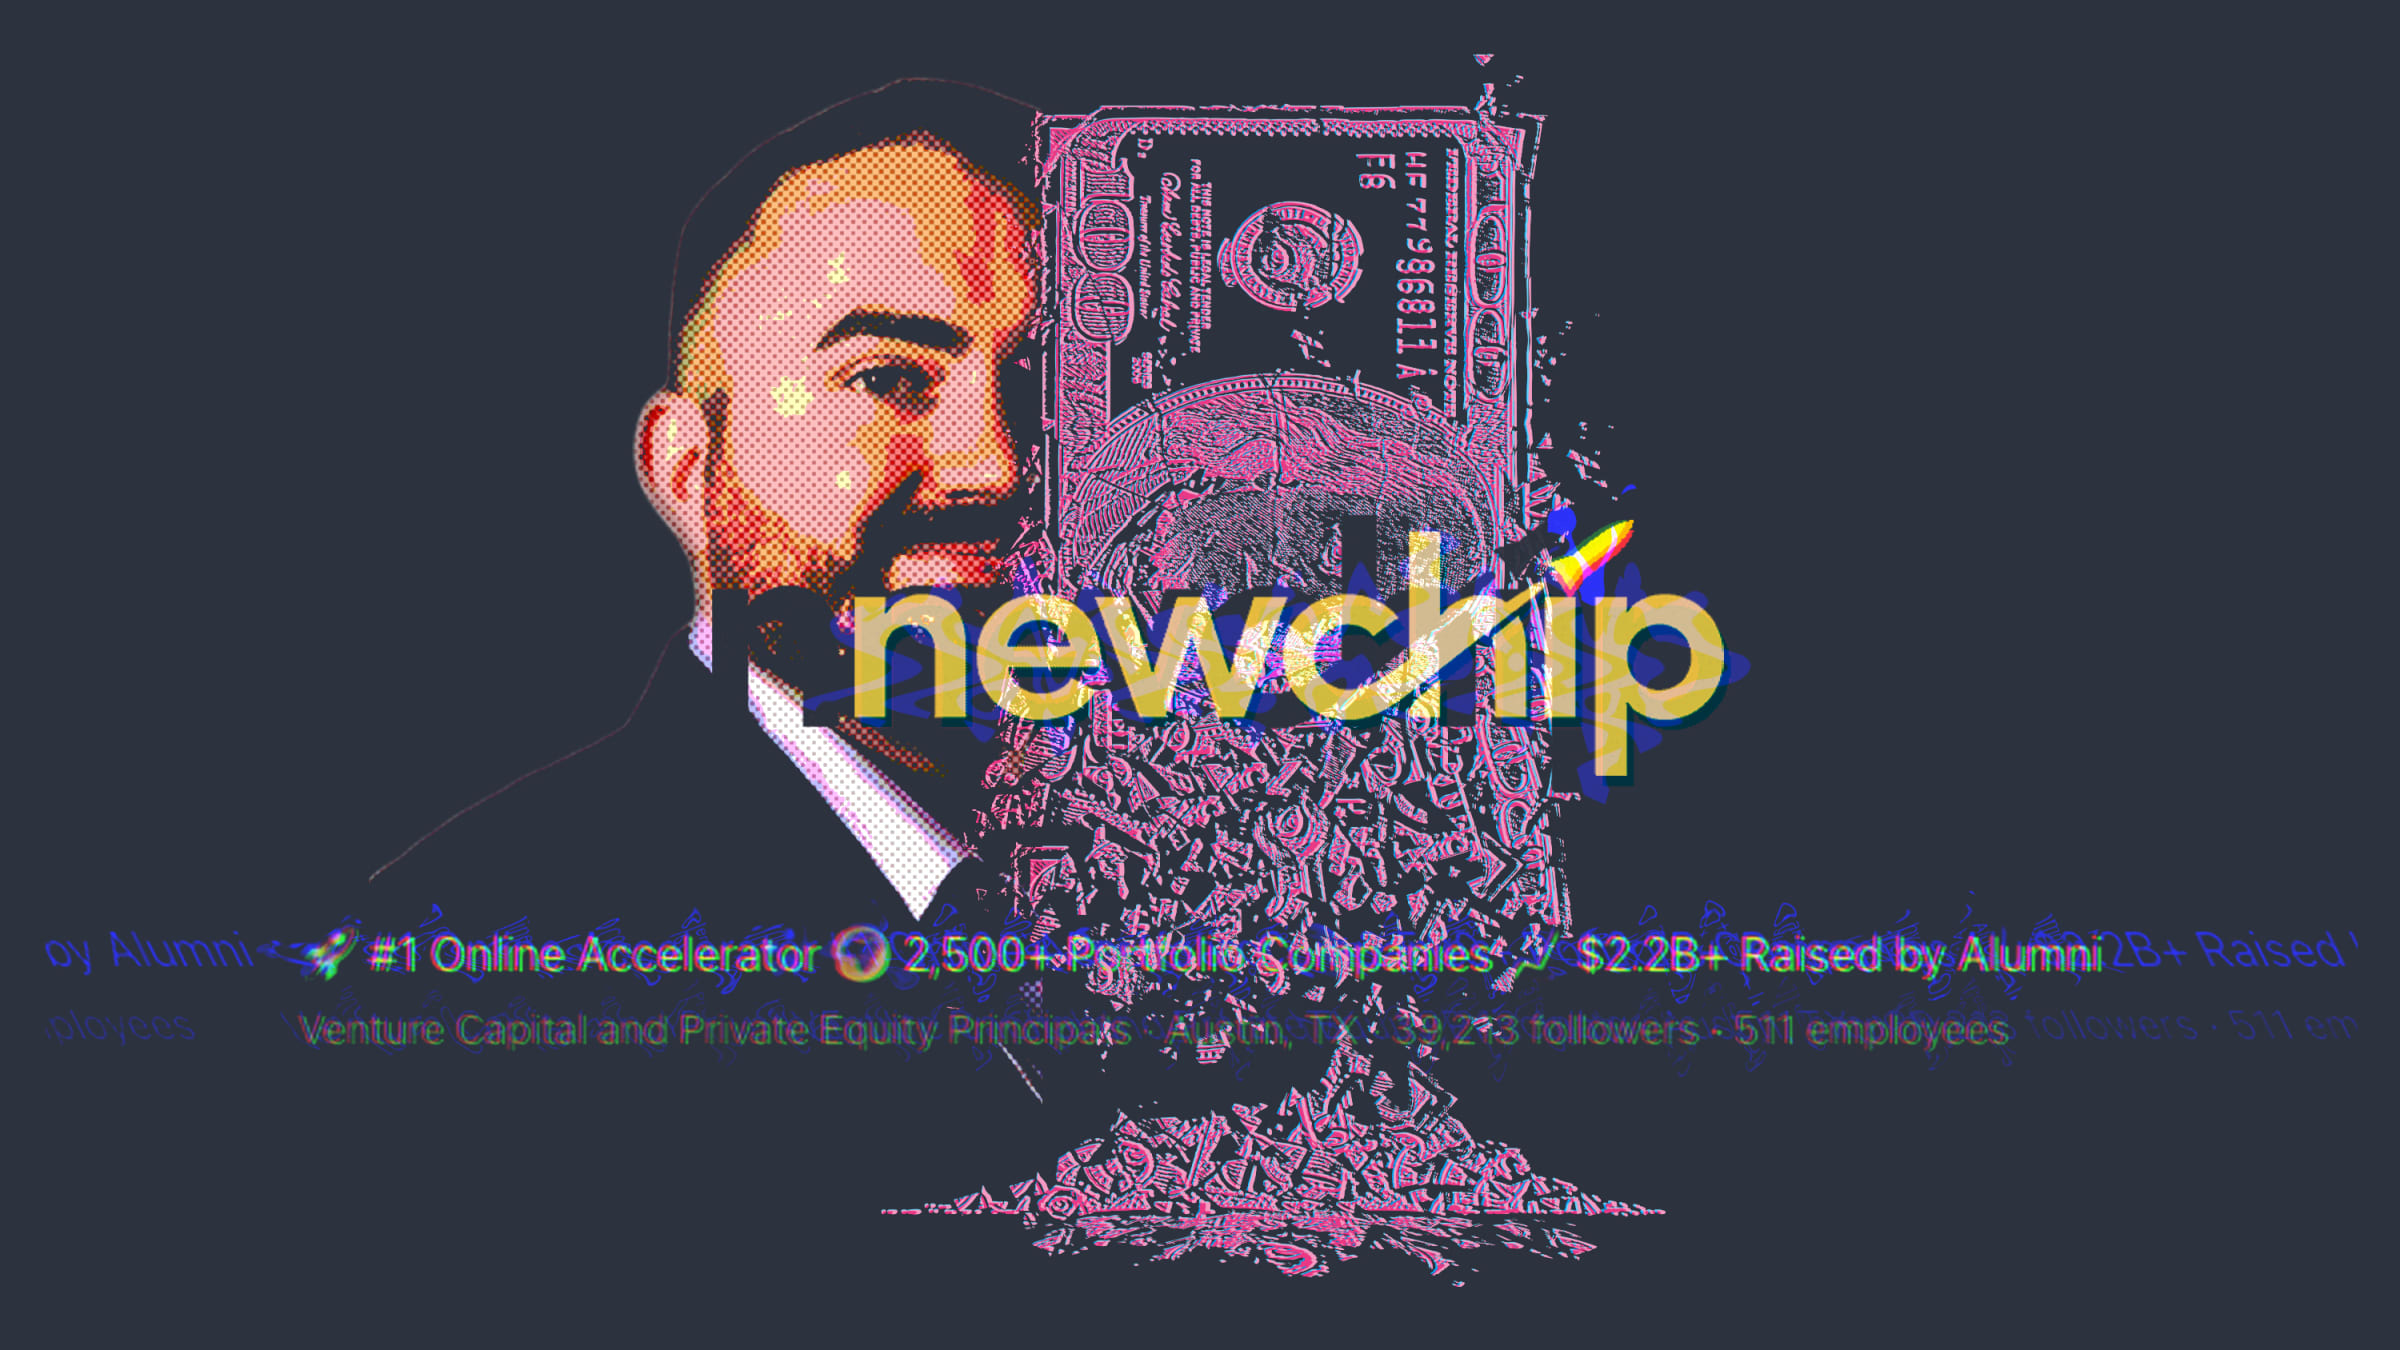 Newchip founder Andrew Ryan